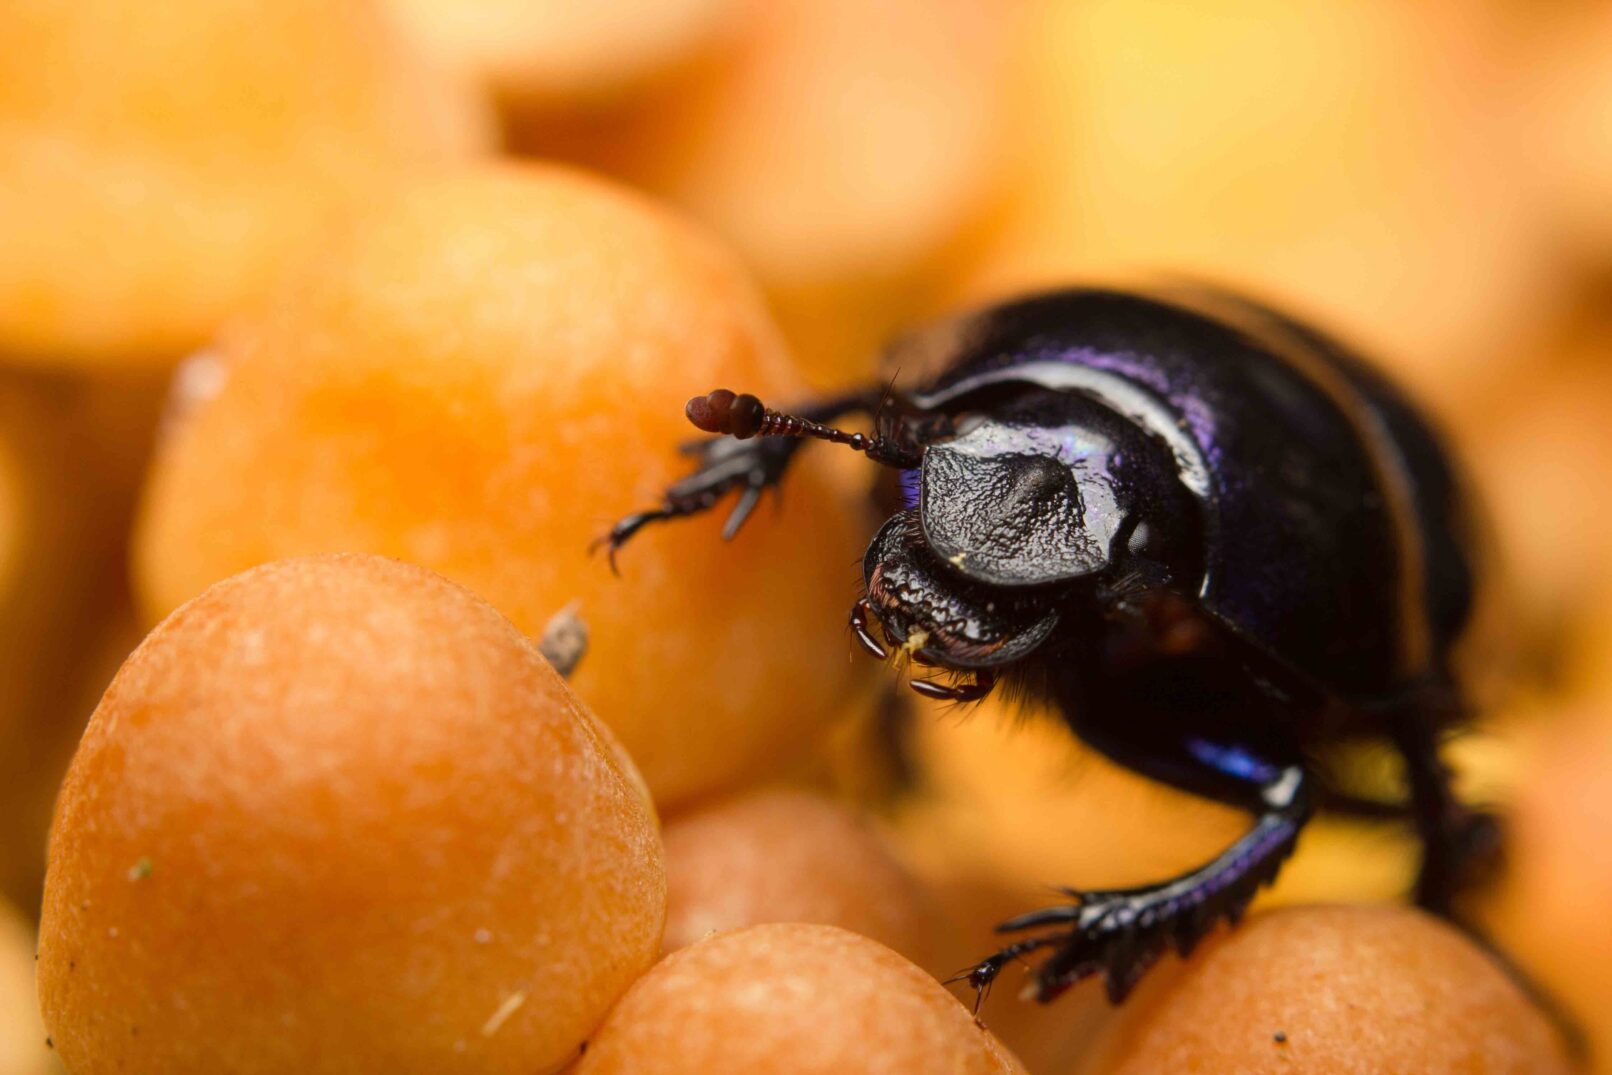 An earth-boring dung beetle and orange woodland mushrooms